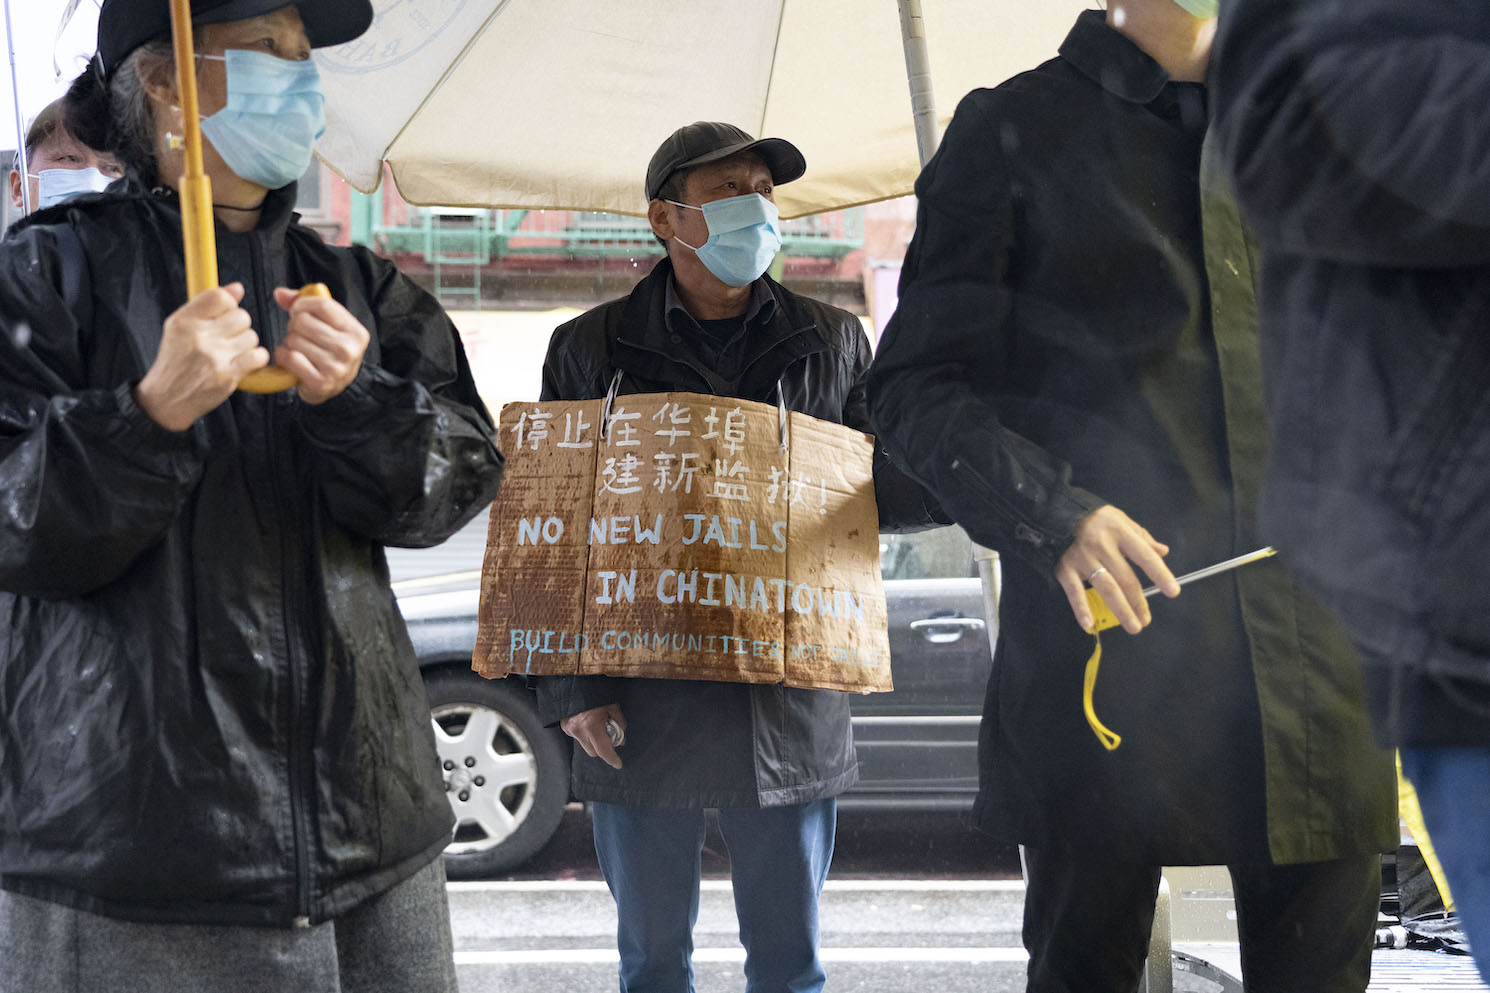 Demonstrators+boycott+Chinatown+museum+to+protest+new+mega+jail